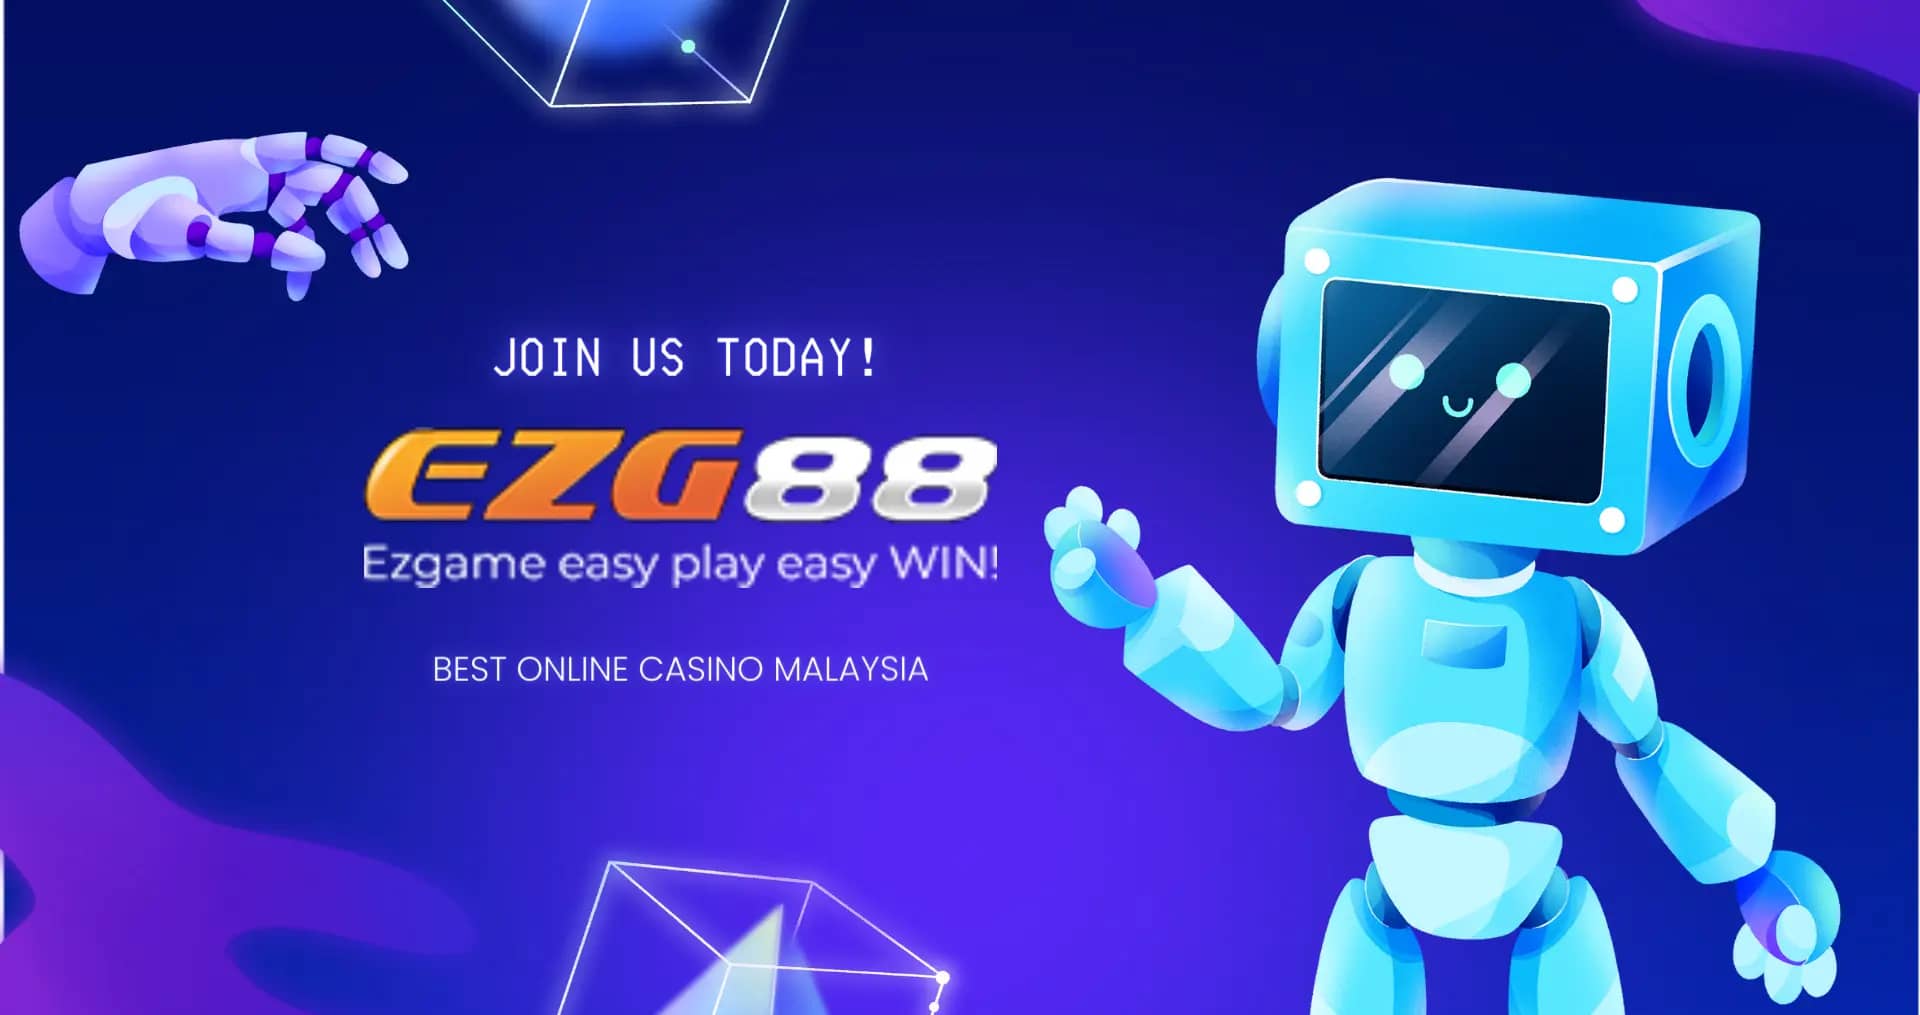 Best Online Casino Malaysia- EZG88